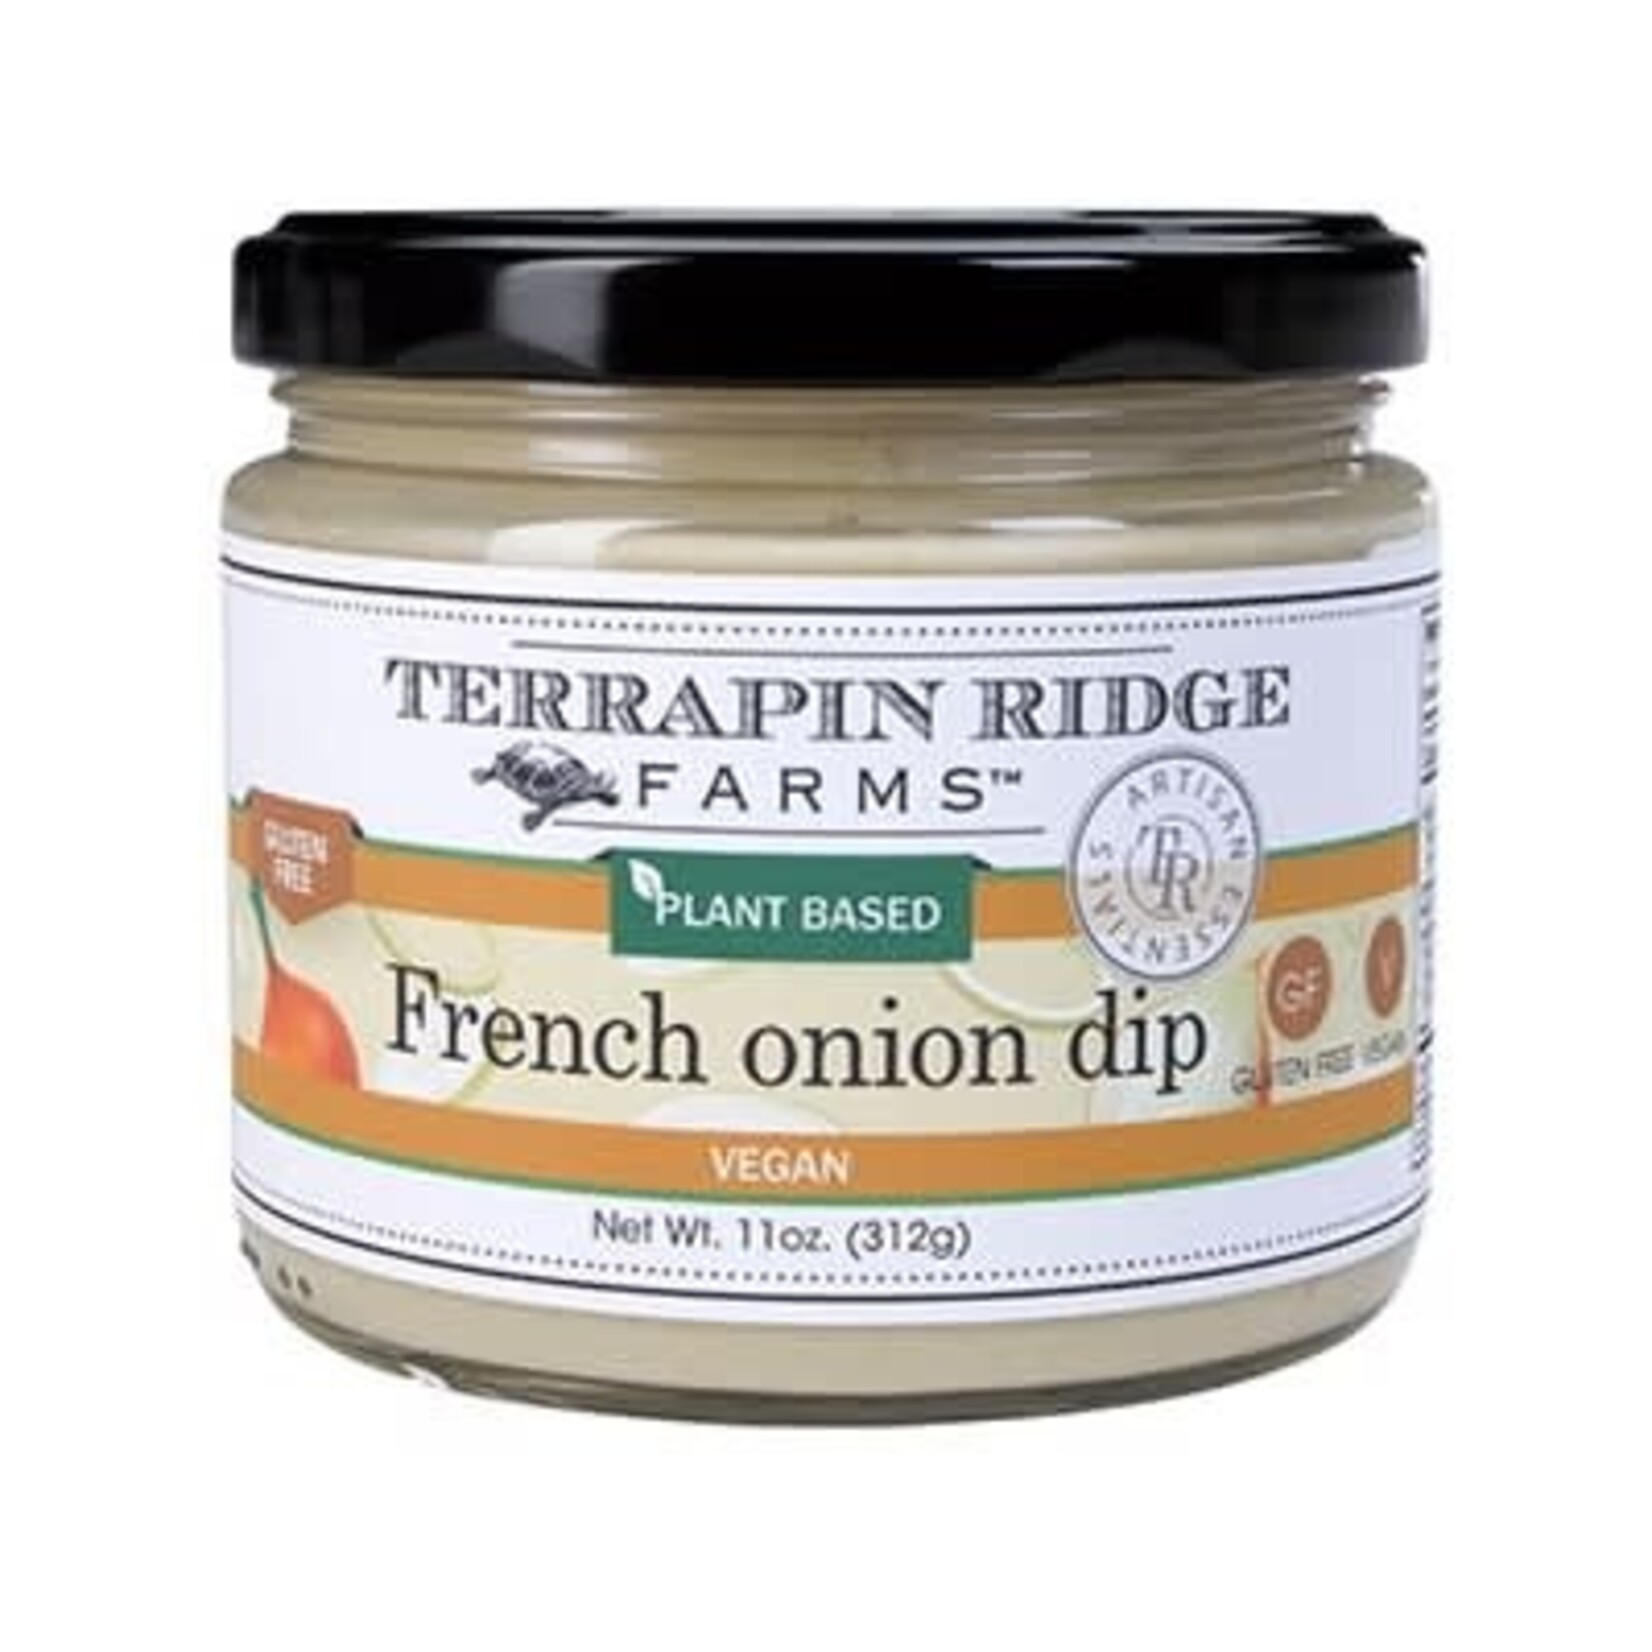 Terrapin Ridge Farms French Onion Dip 11 oz.  - Plant Based